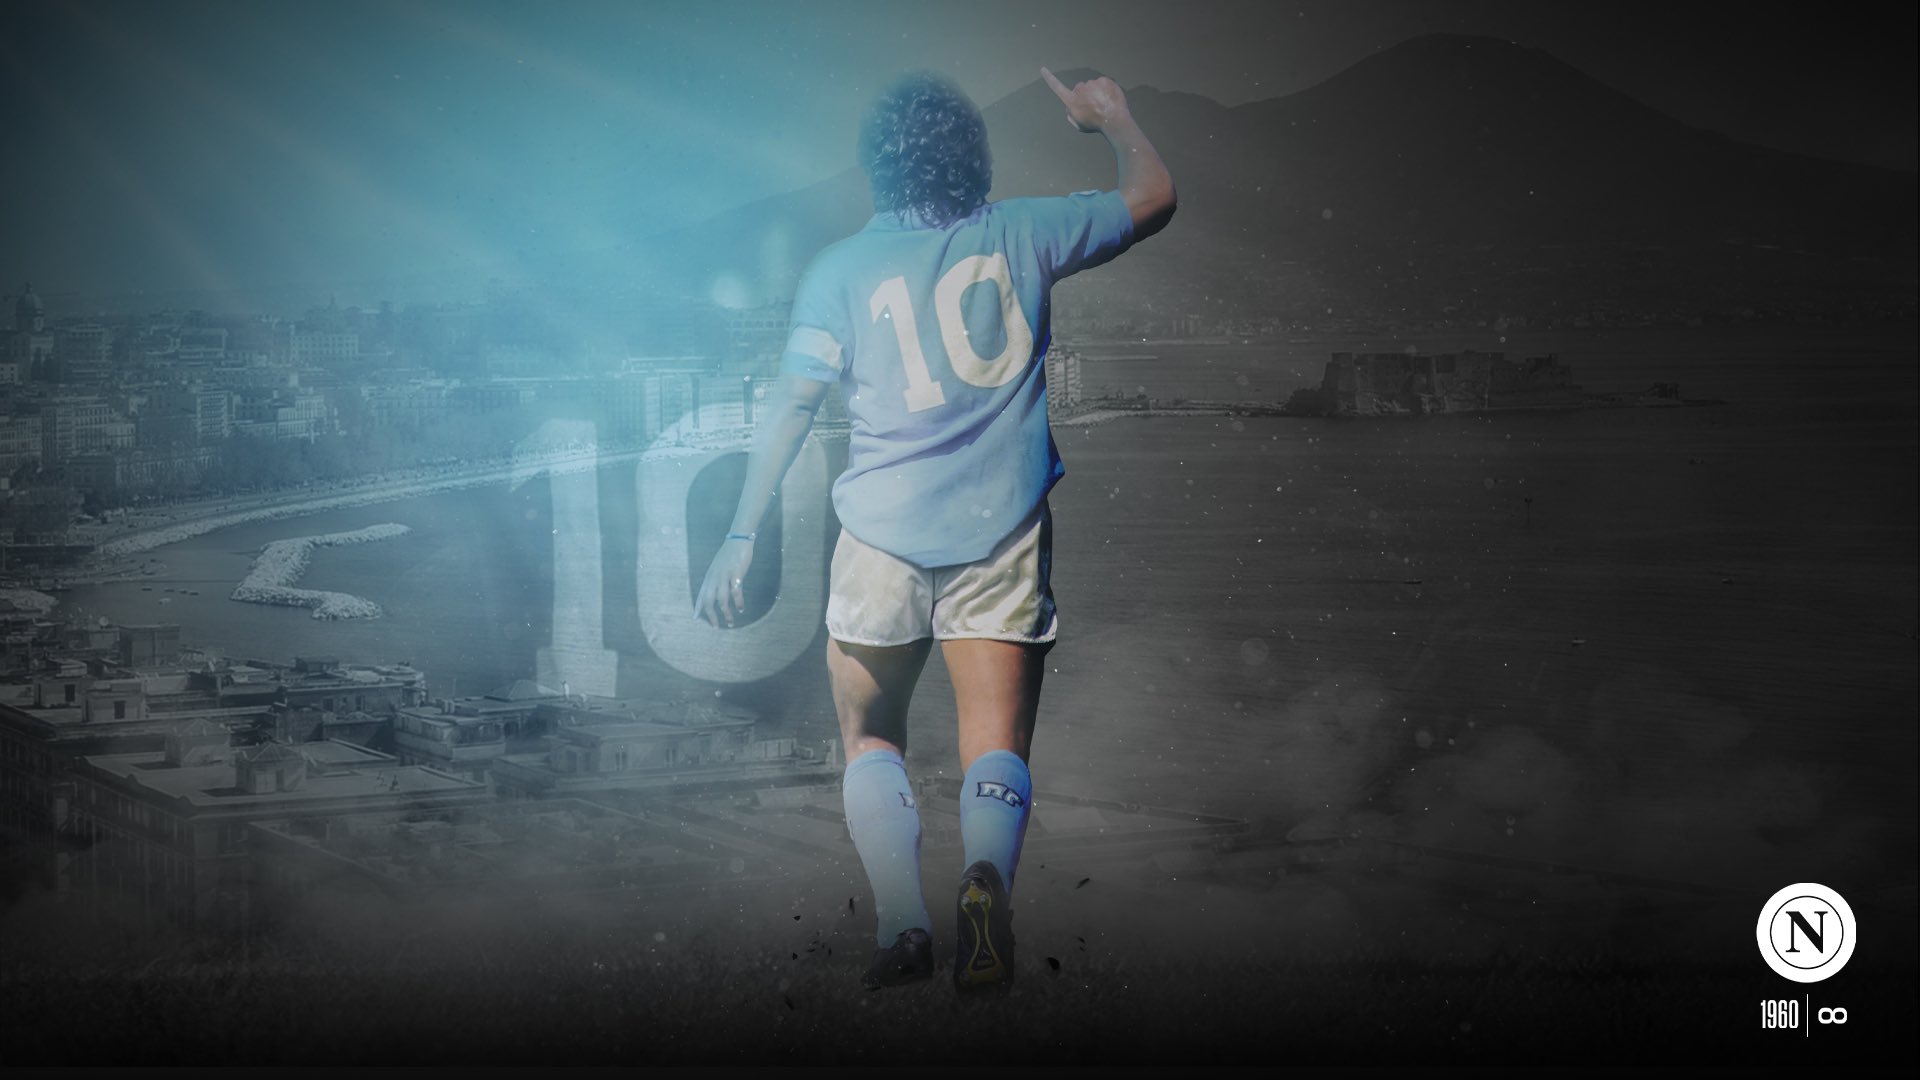 El mundo del futbol recuerda a Maradona. Foto: Twitter